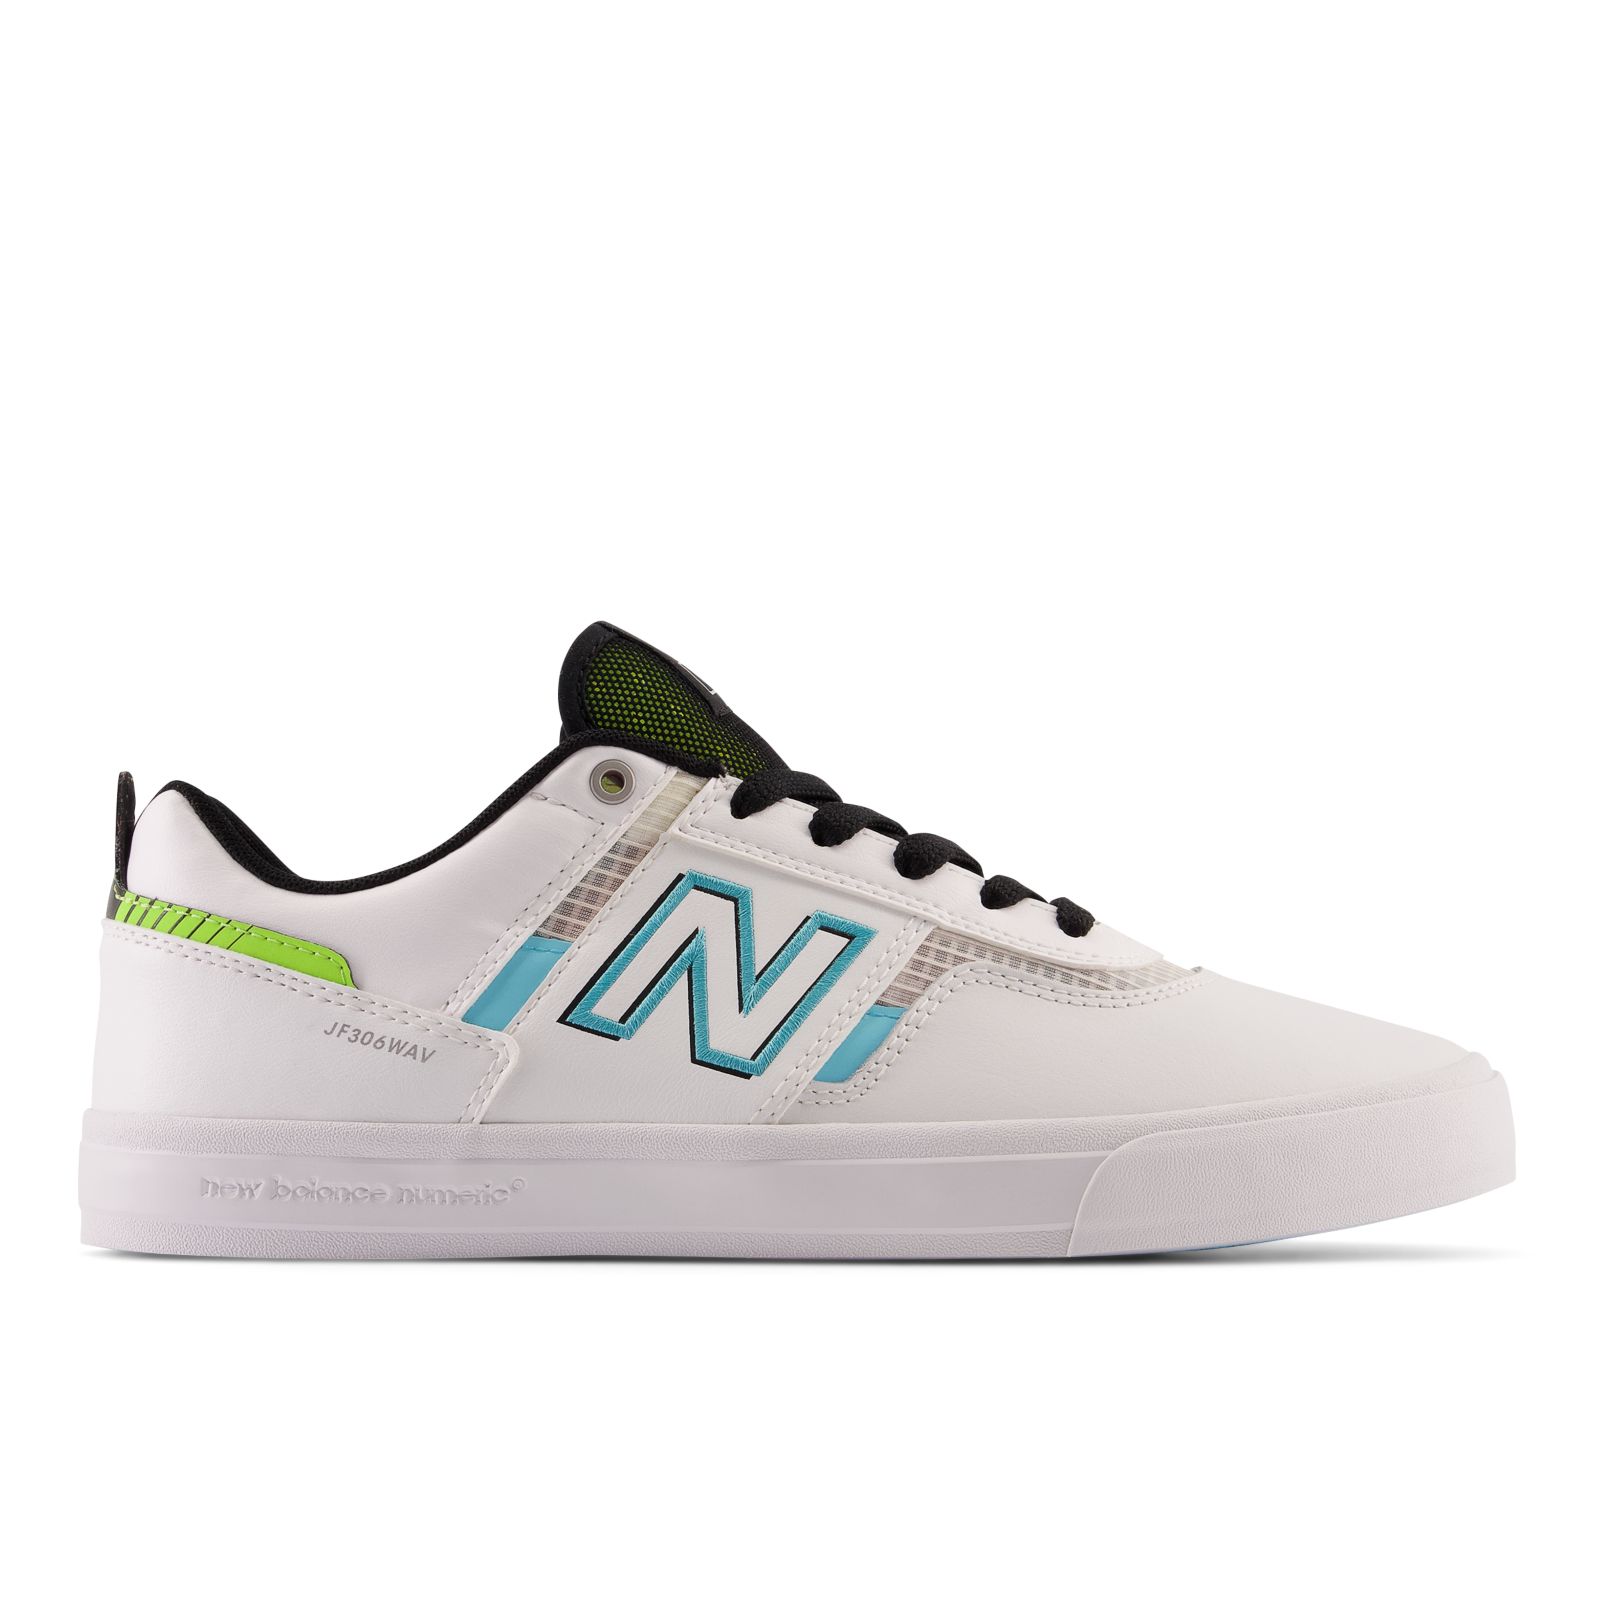 New Balance Jamie Foy 306 White/Green Shoes